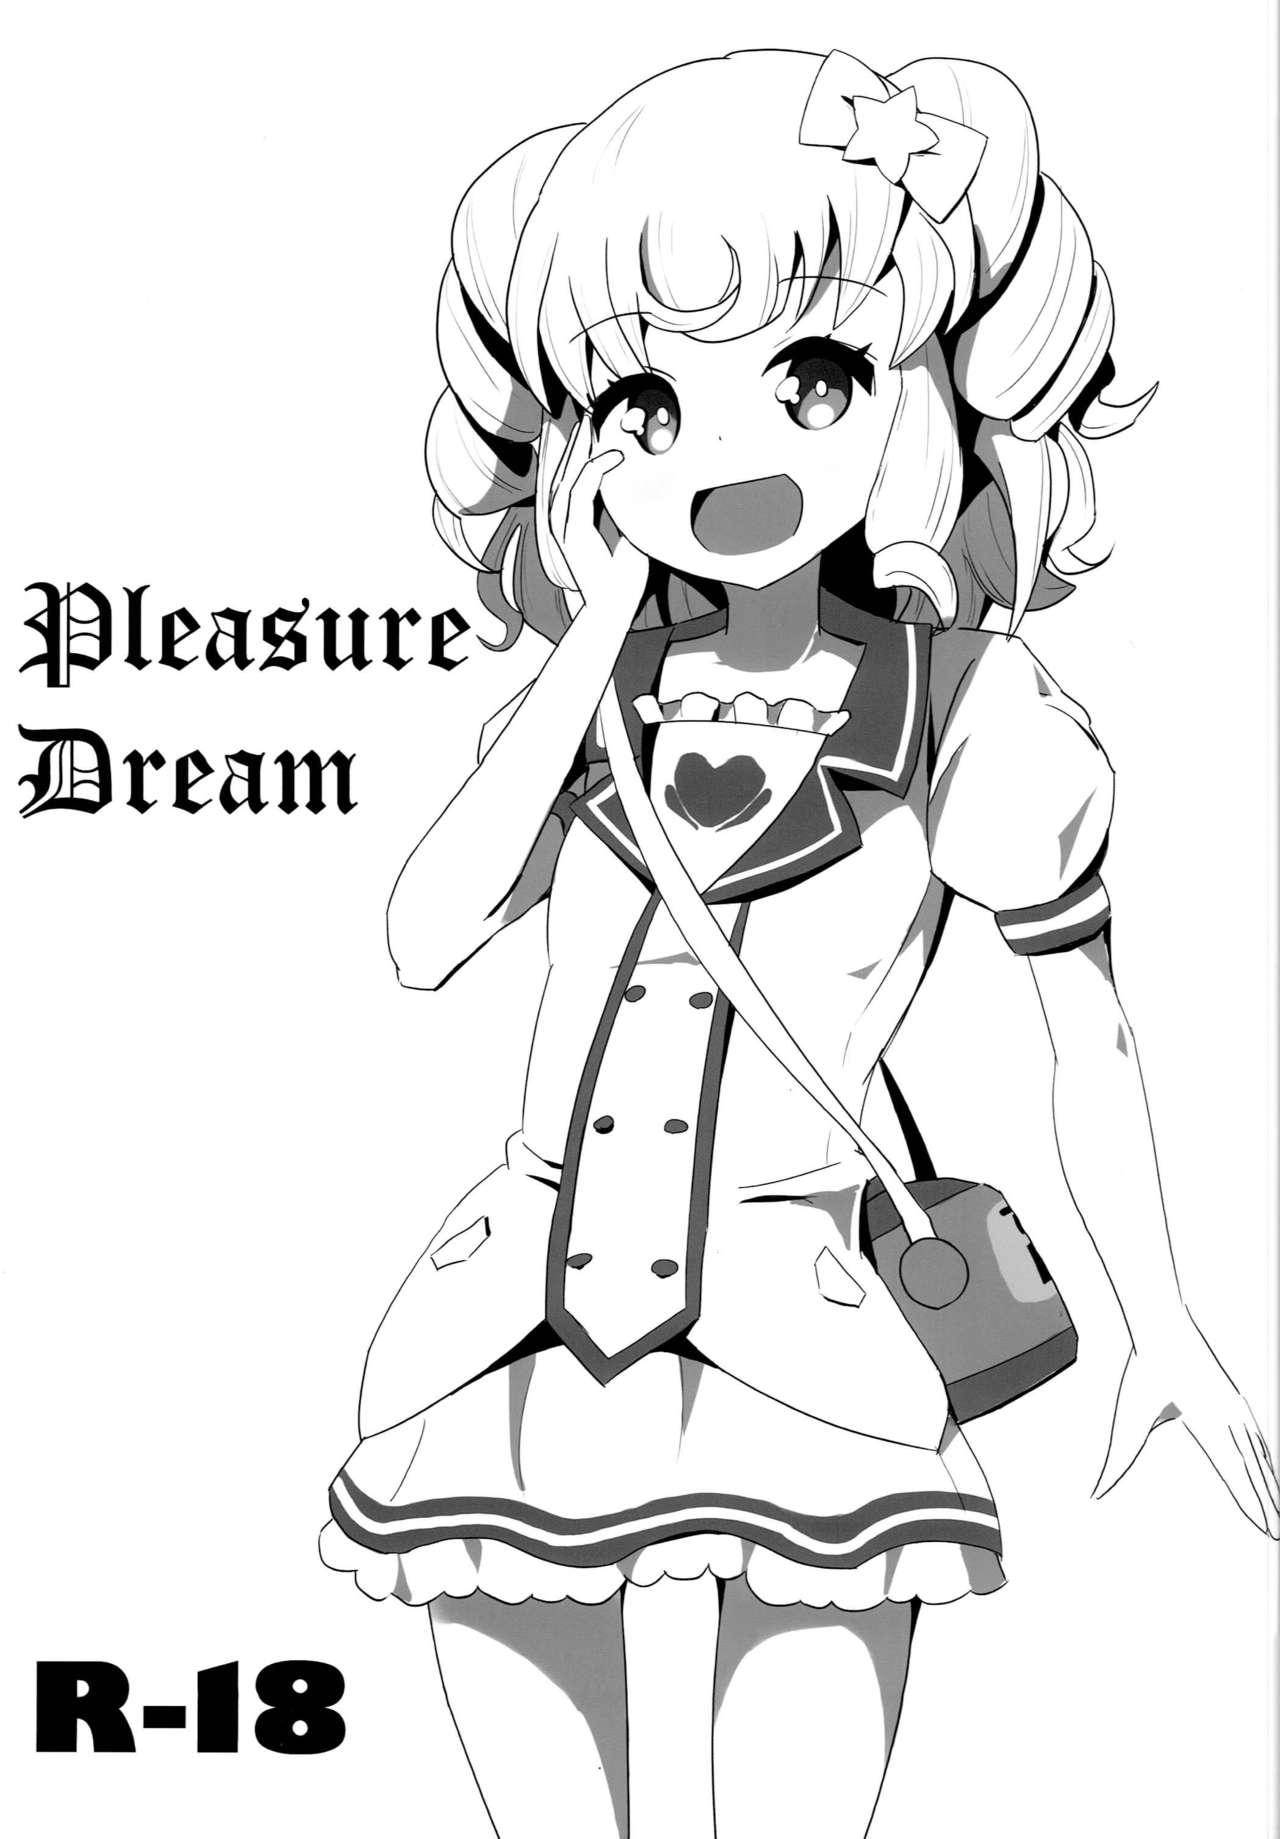 Pleasure Dream 0